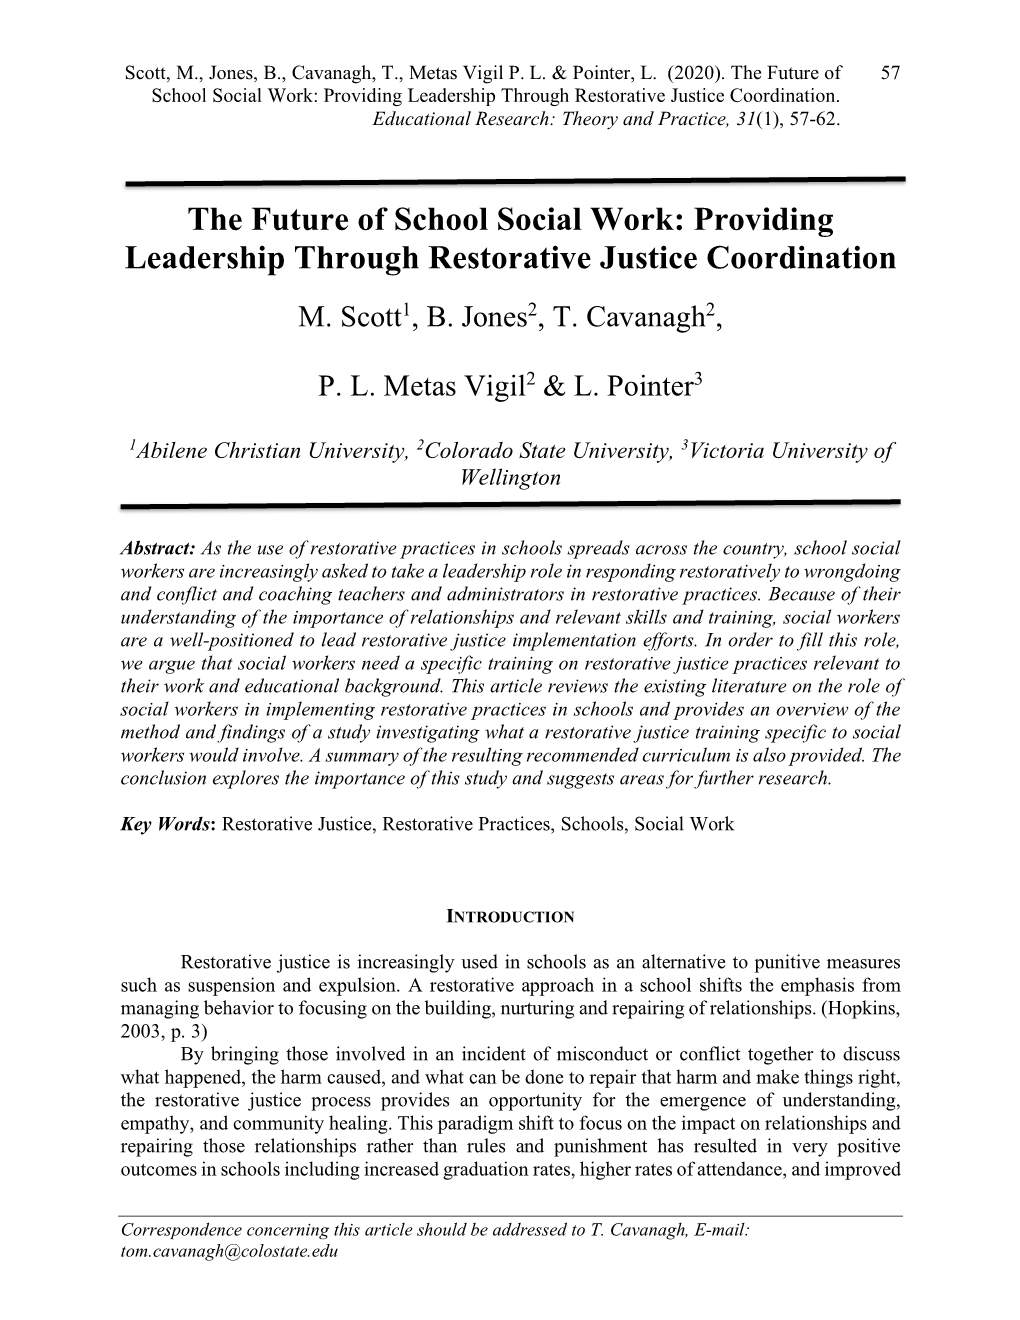 The Future of School Social Work: Providing Leadership Through Restorative Justice Coordination